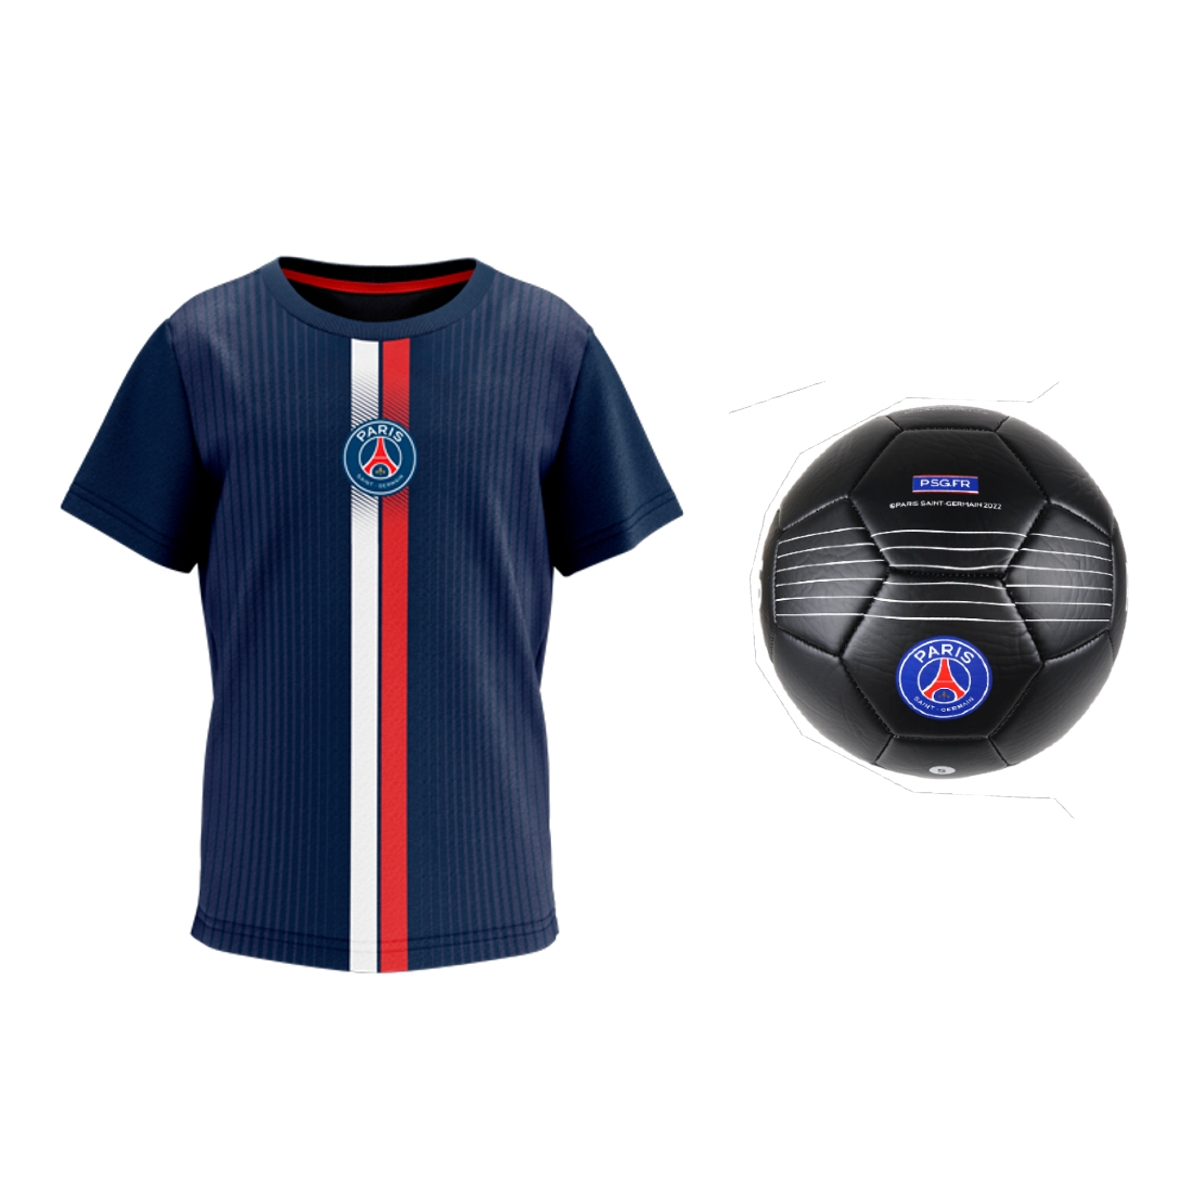 Kit PSG Infantil Oficial - Camisa Clove + Bola Black Club